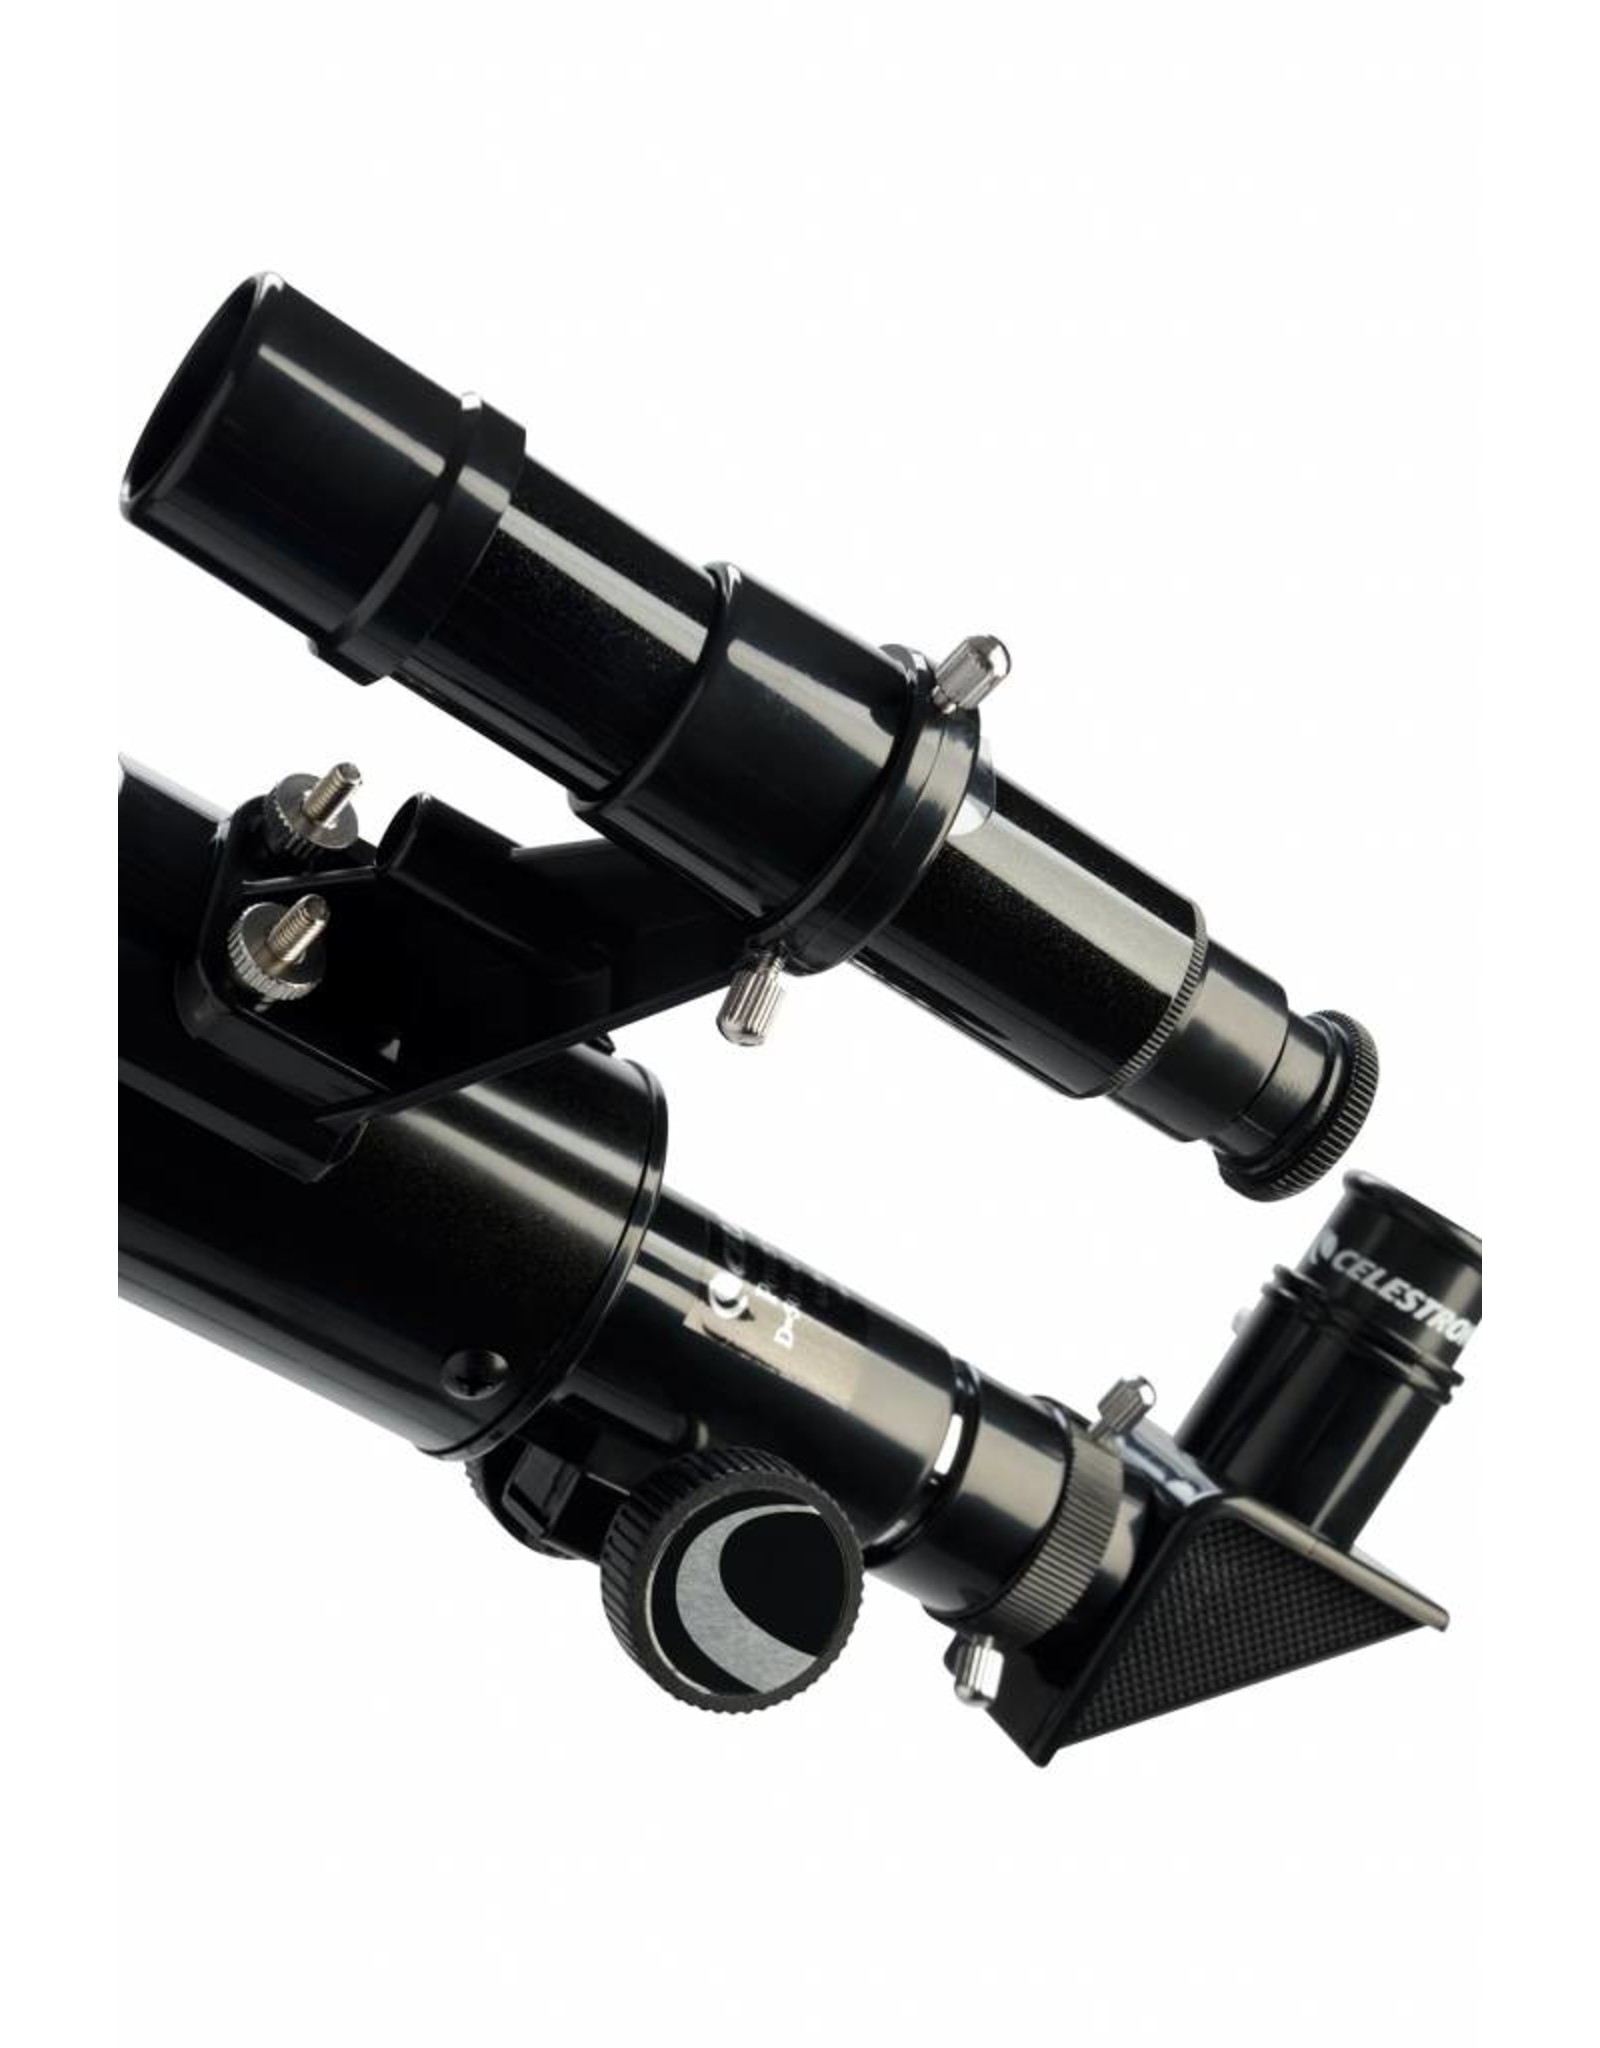 Celestron Celestron PowerSeeker 50AZ Telescope